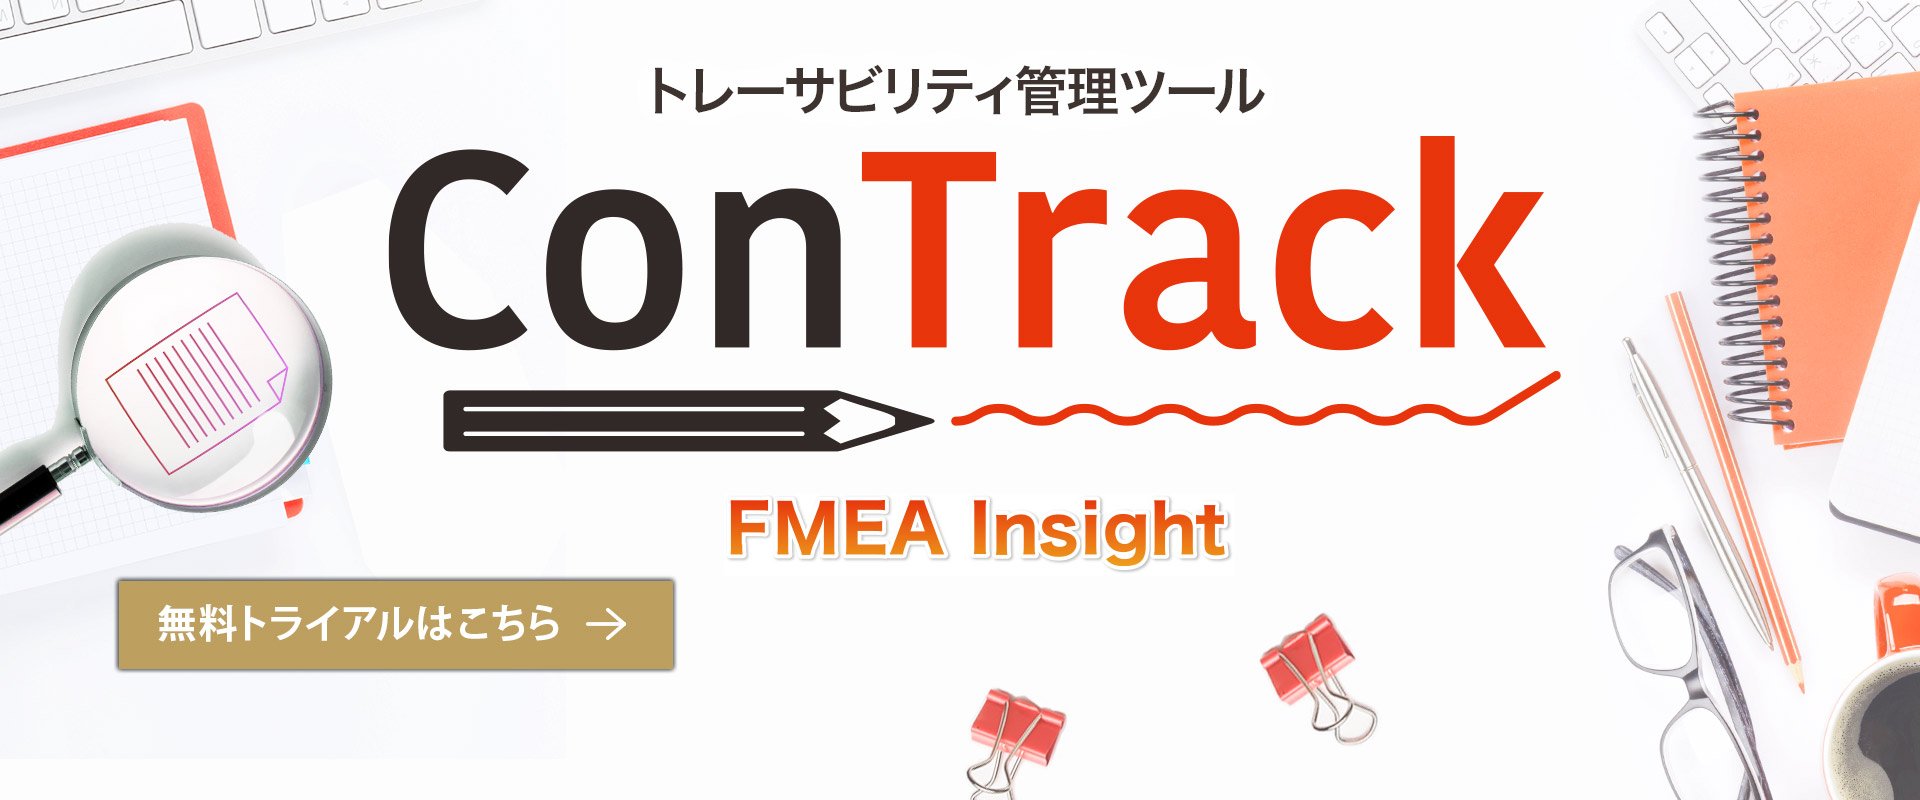 「ConTrack」FMEA Insightエディション